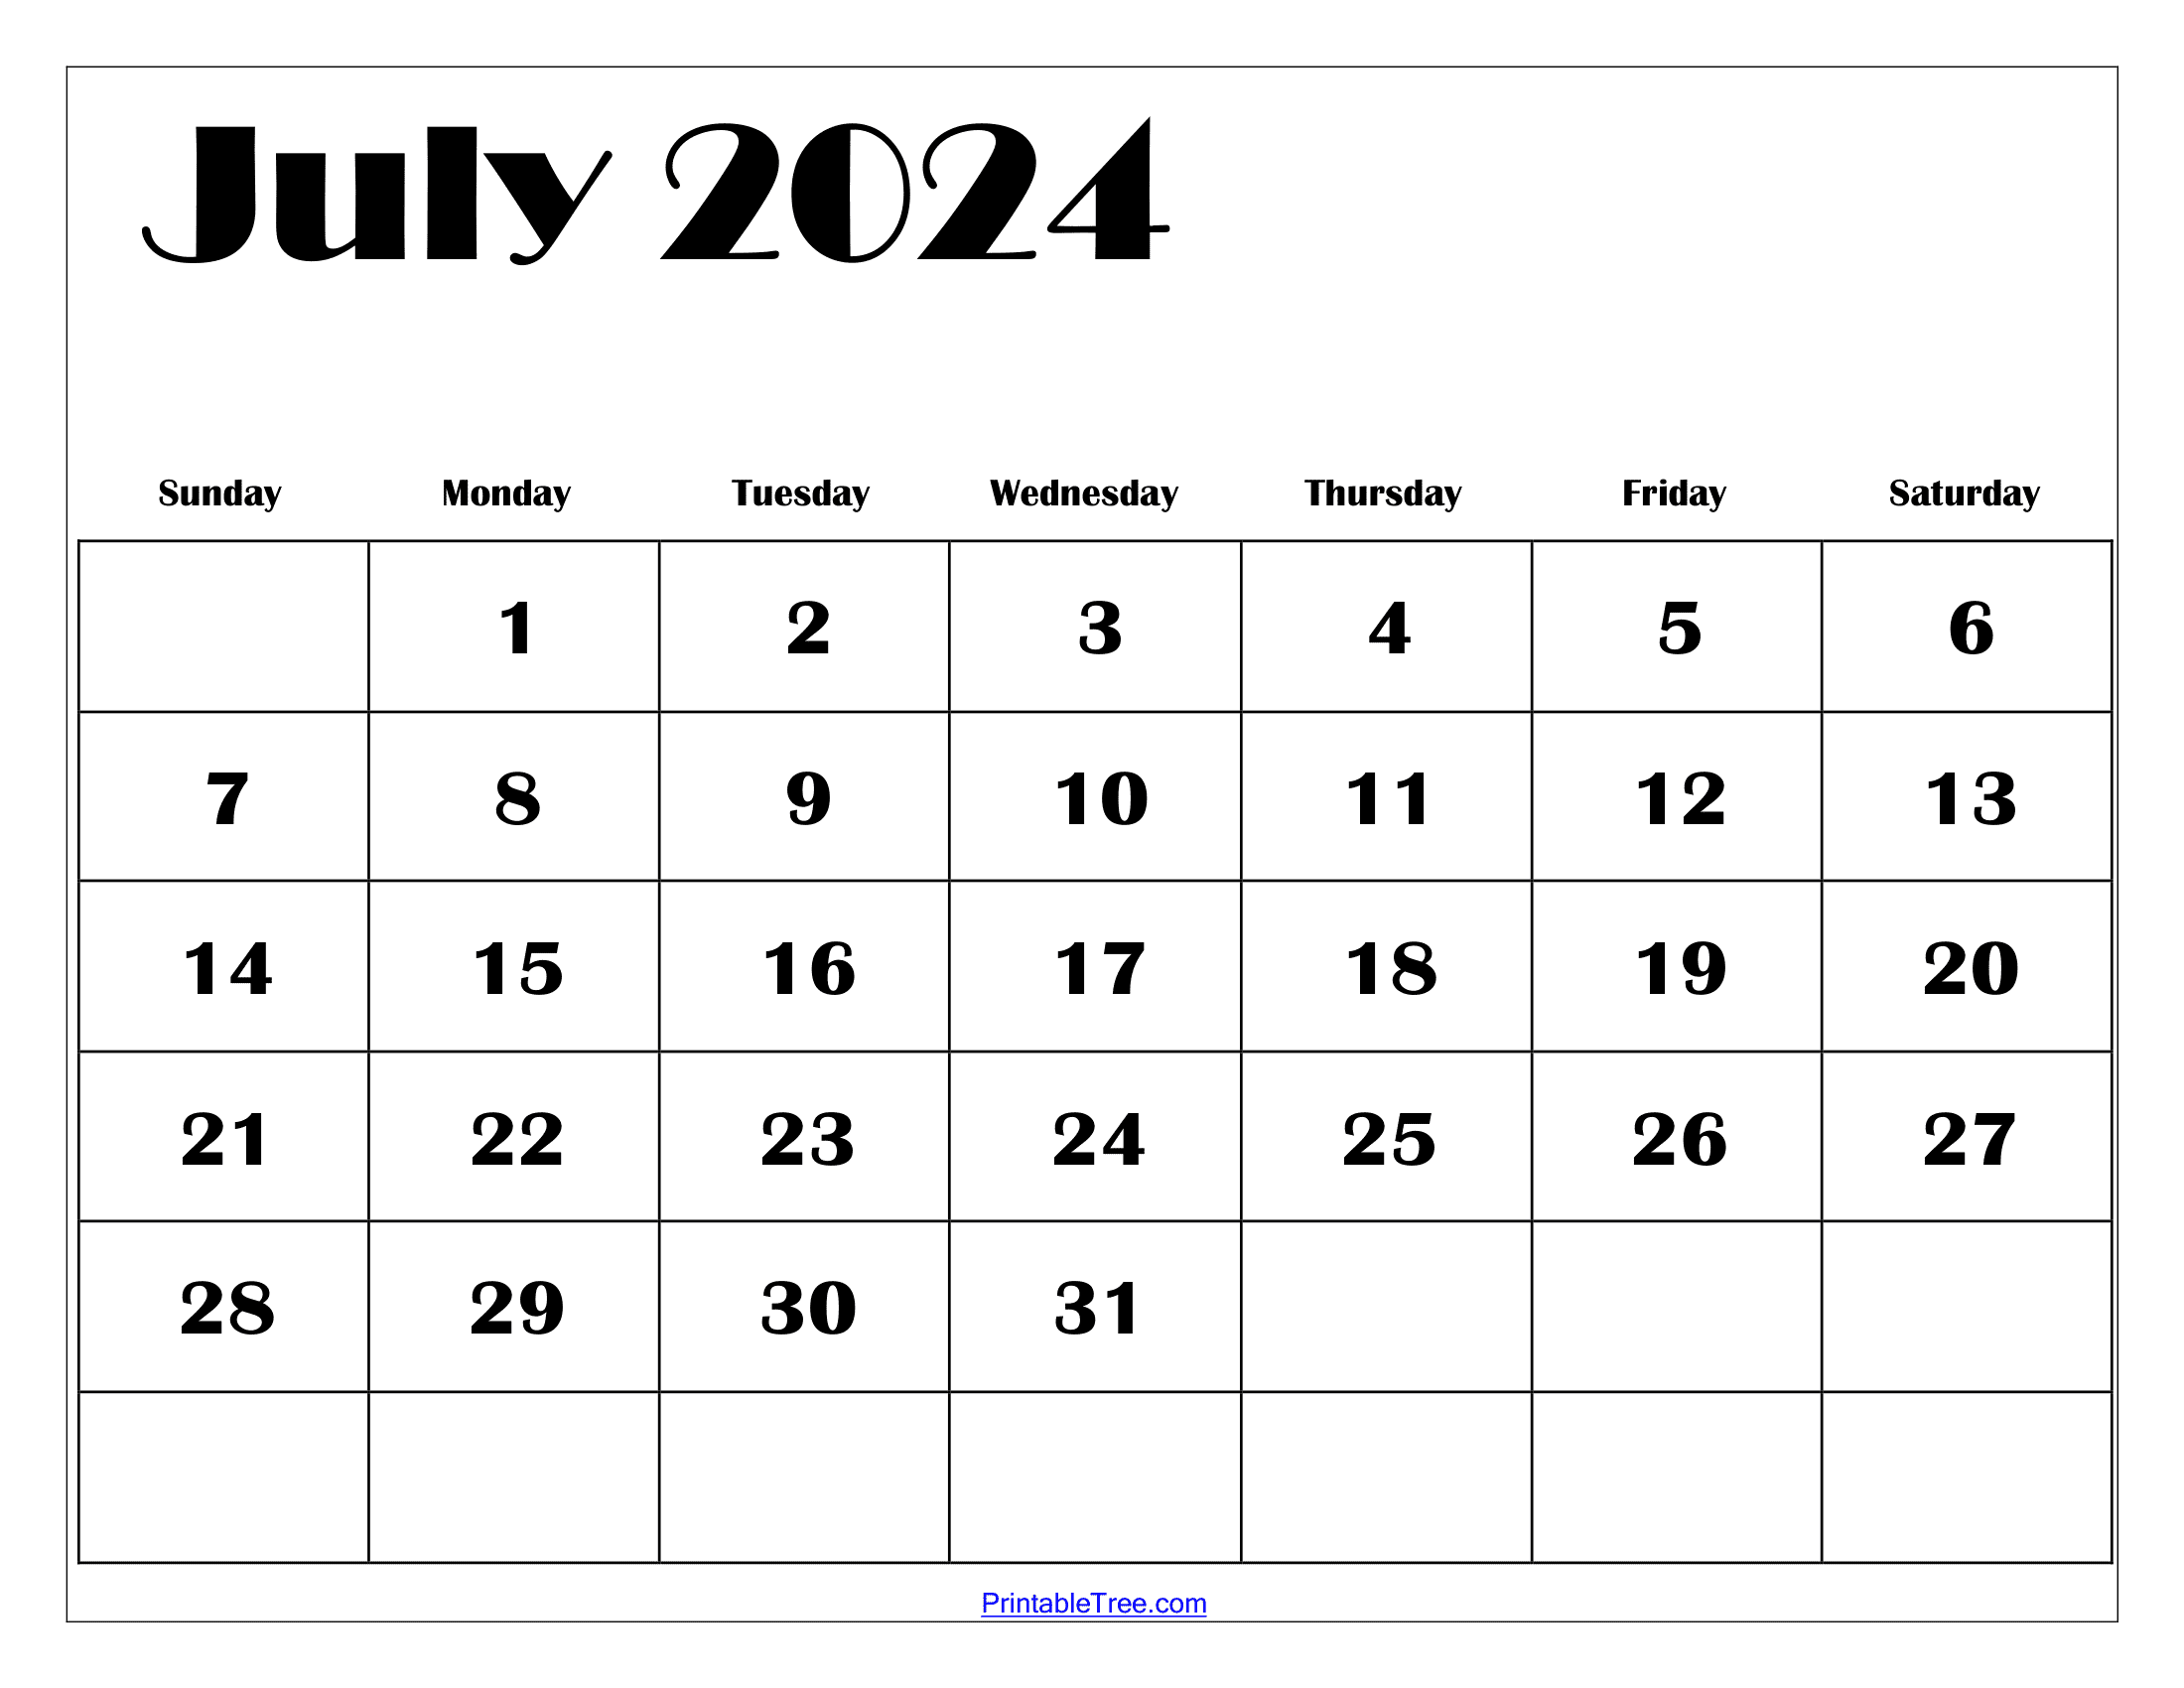 July 2024 Calendar Printable Pdf With Holidays Free Template for Blank Calendar July 2024 Printable